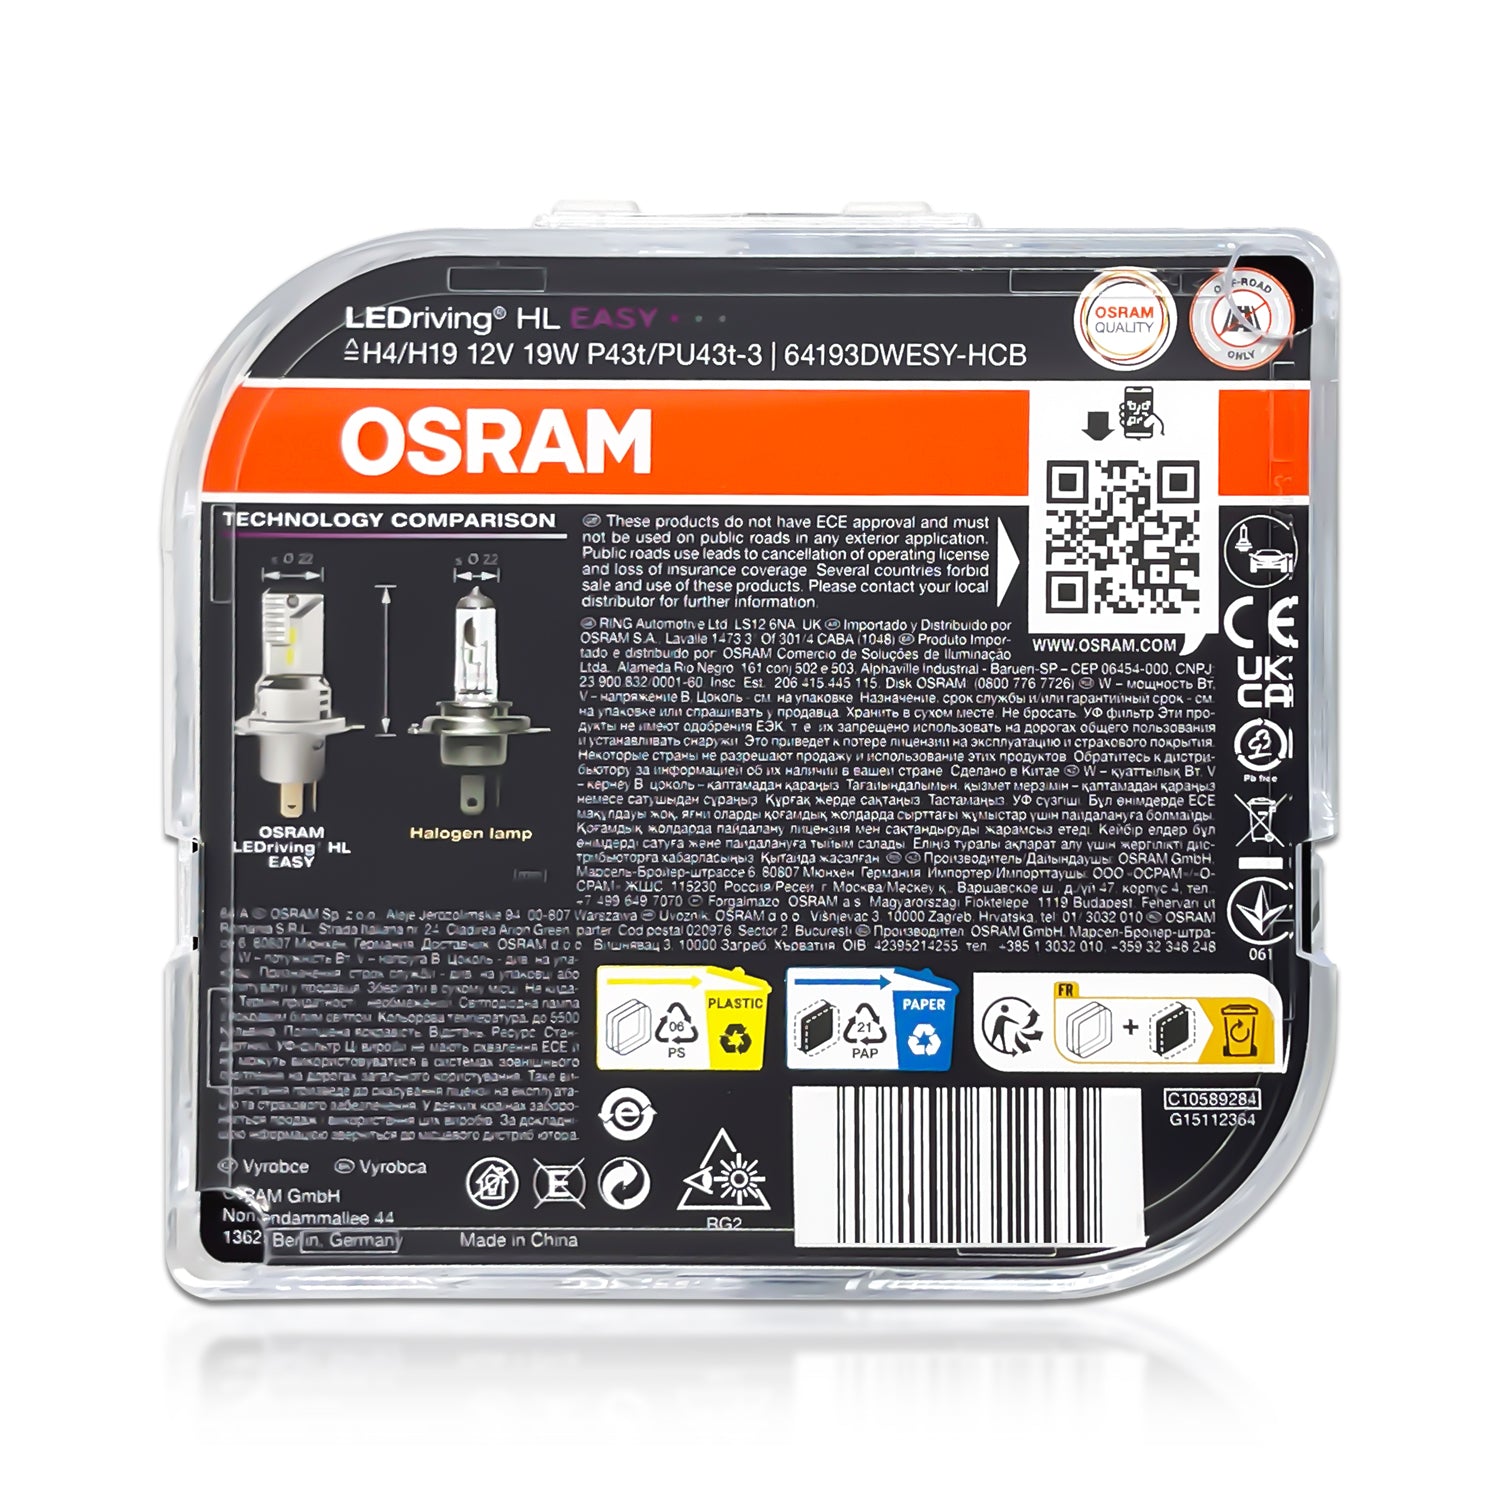 Osram H4 64193DWNB Night Breaker LED Bulbs